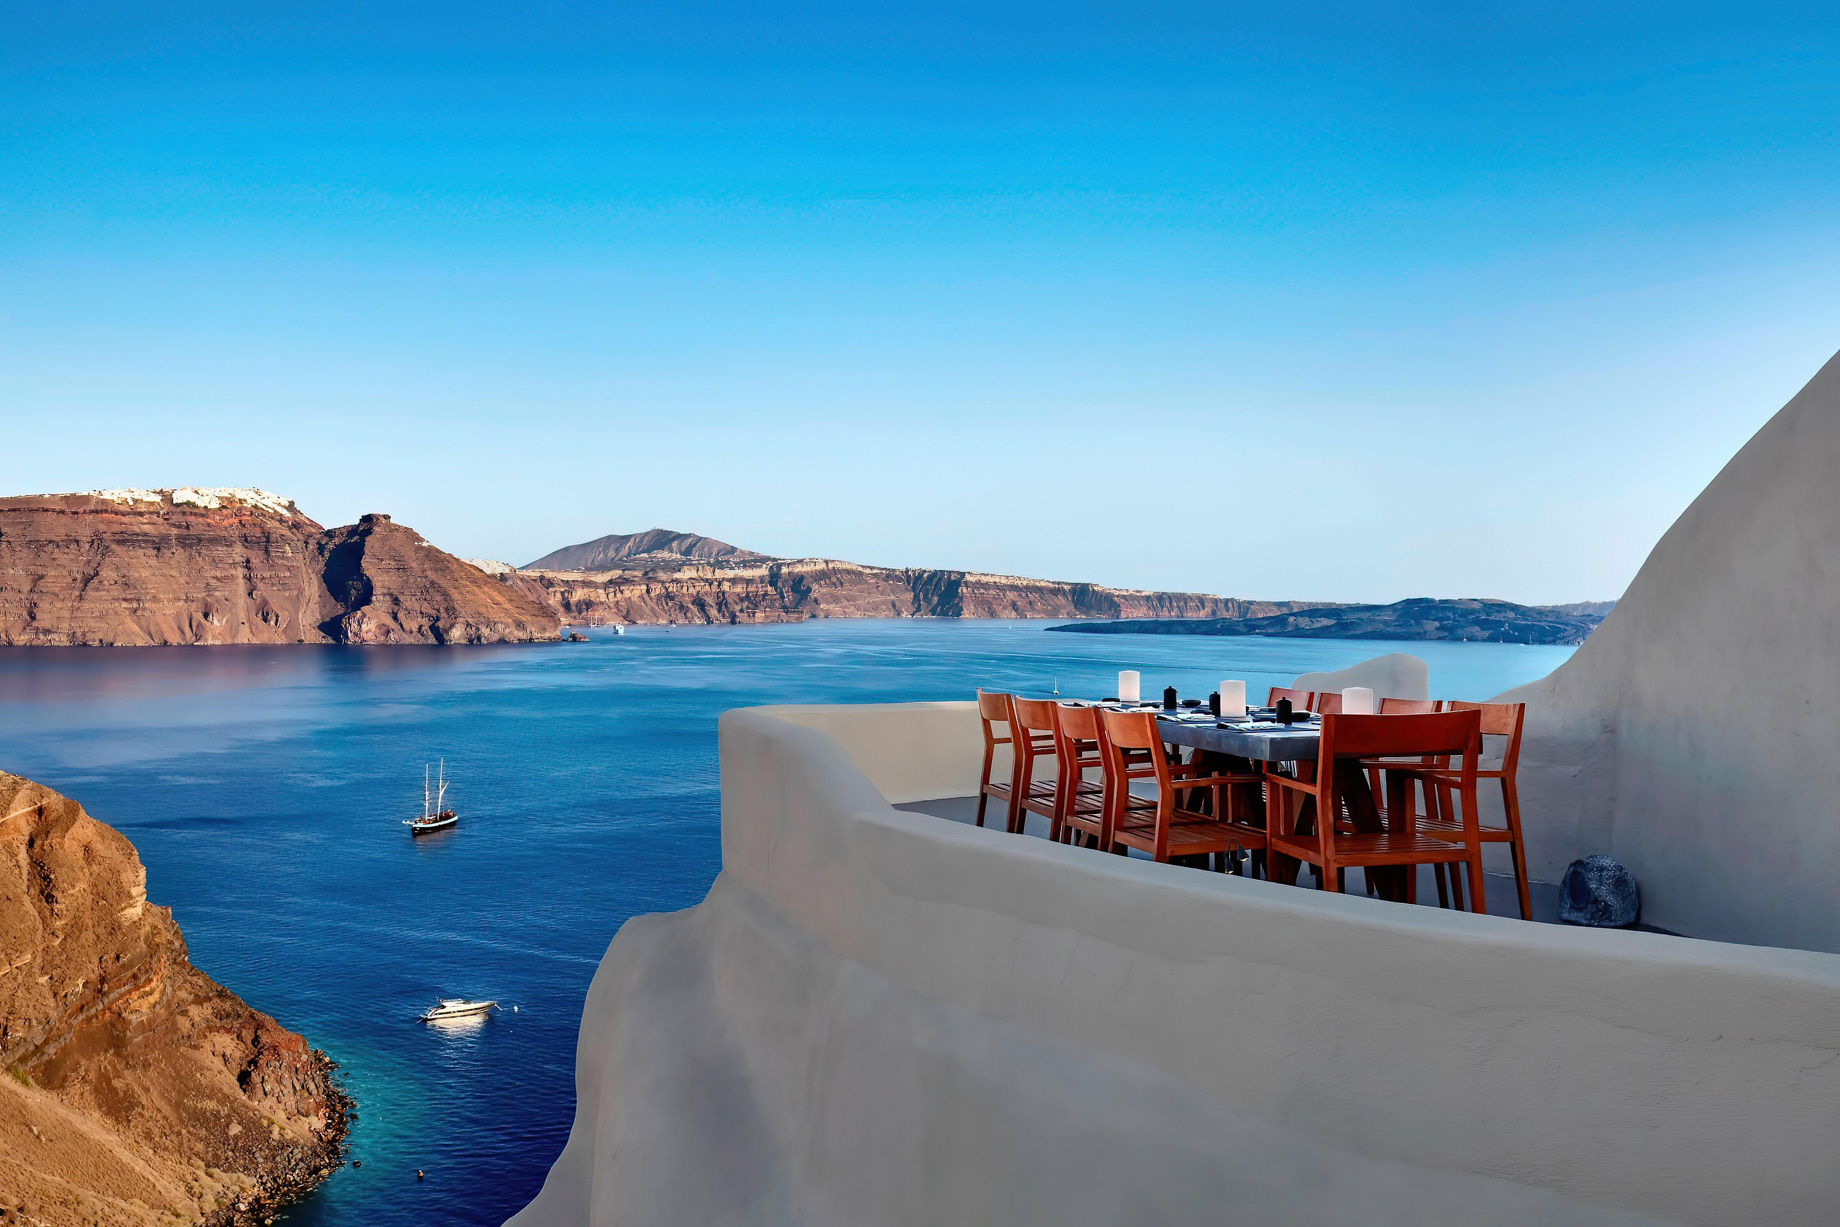 Mystique Hotel Santorini – Oia, Santorini Island, Greece – ASEA Restaurant Table Sea View